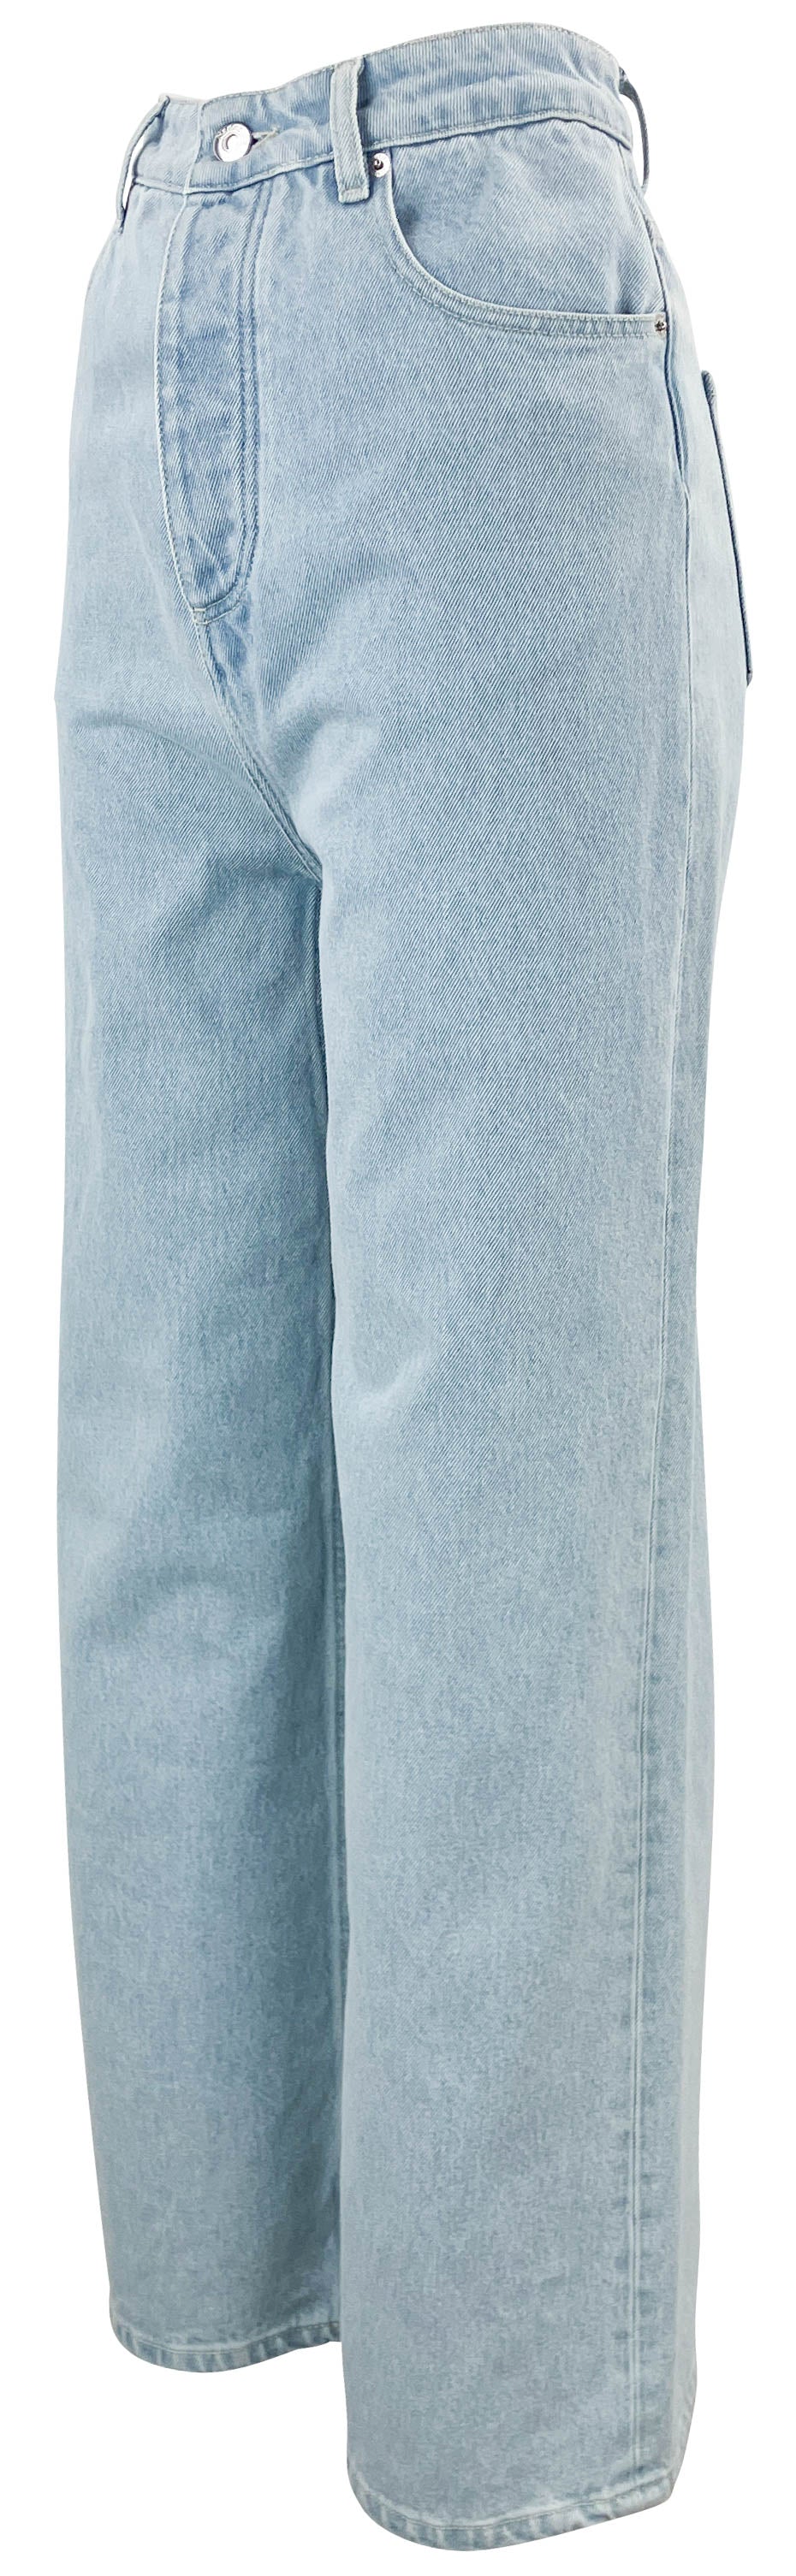 Nanushka Josine Ultra Oversized Jeans - Discounts on Nanushka at UAL